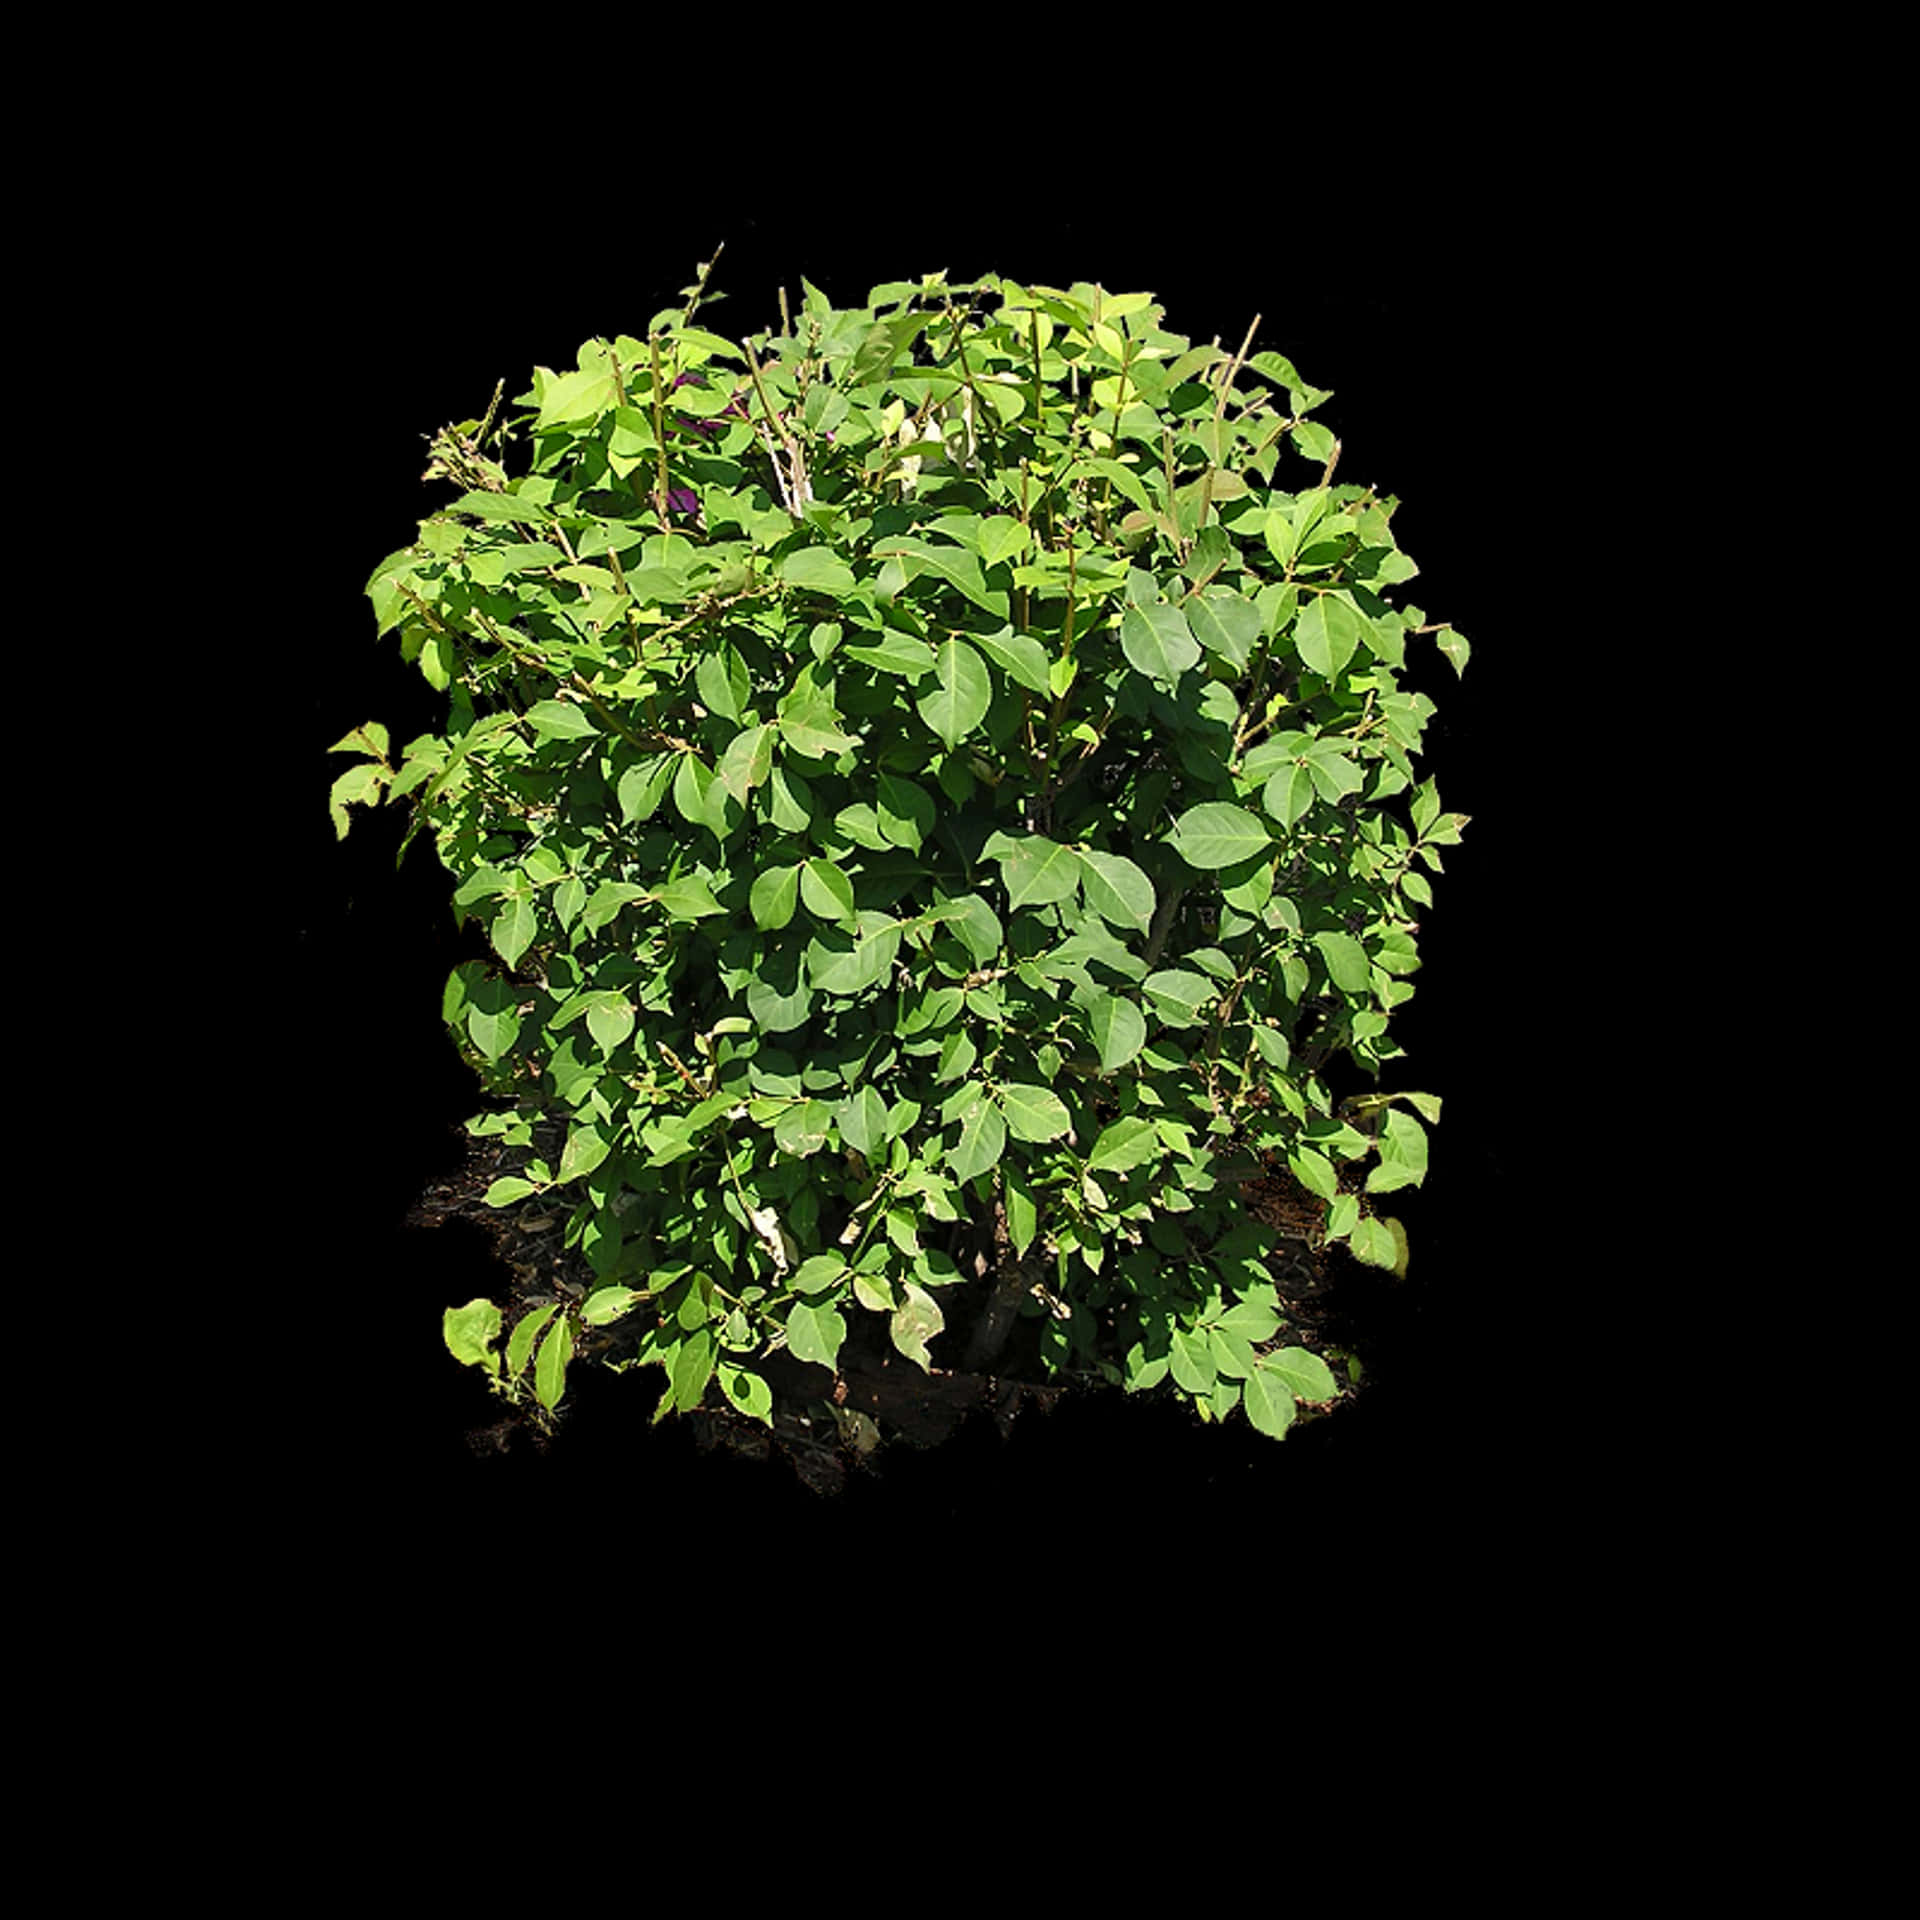 Minimalist Shaggy Green Dendrolobium Bush Wallpaper